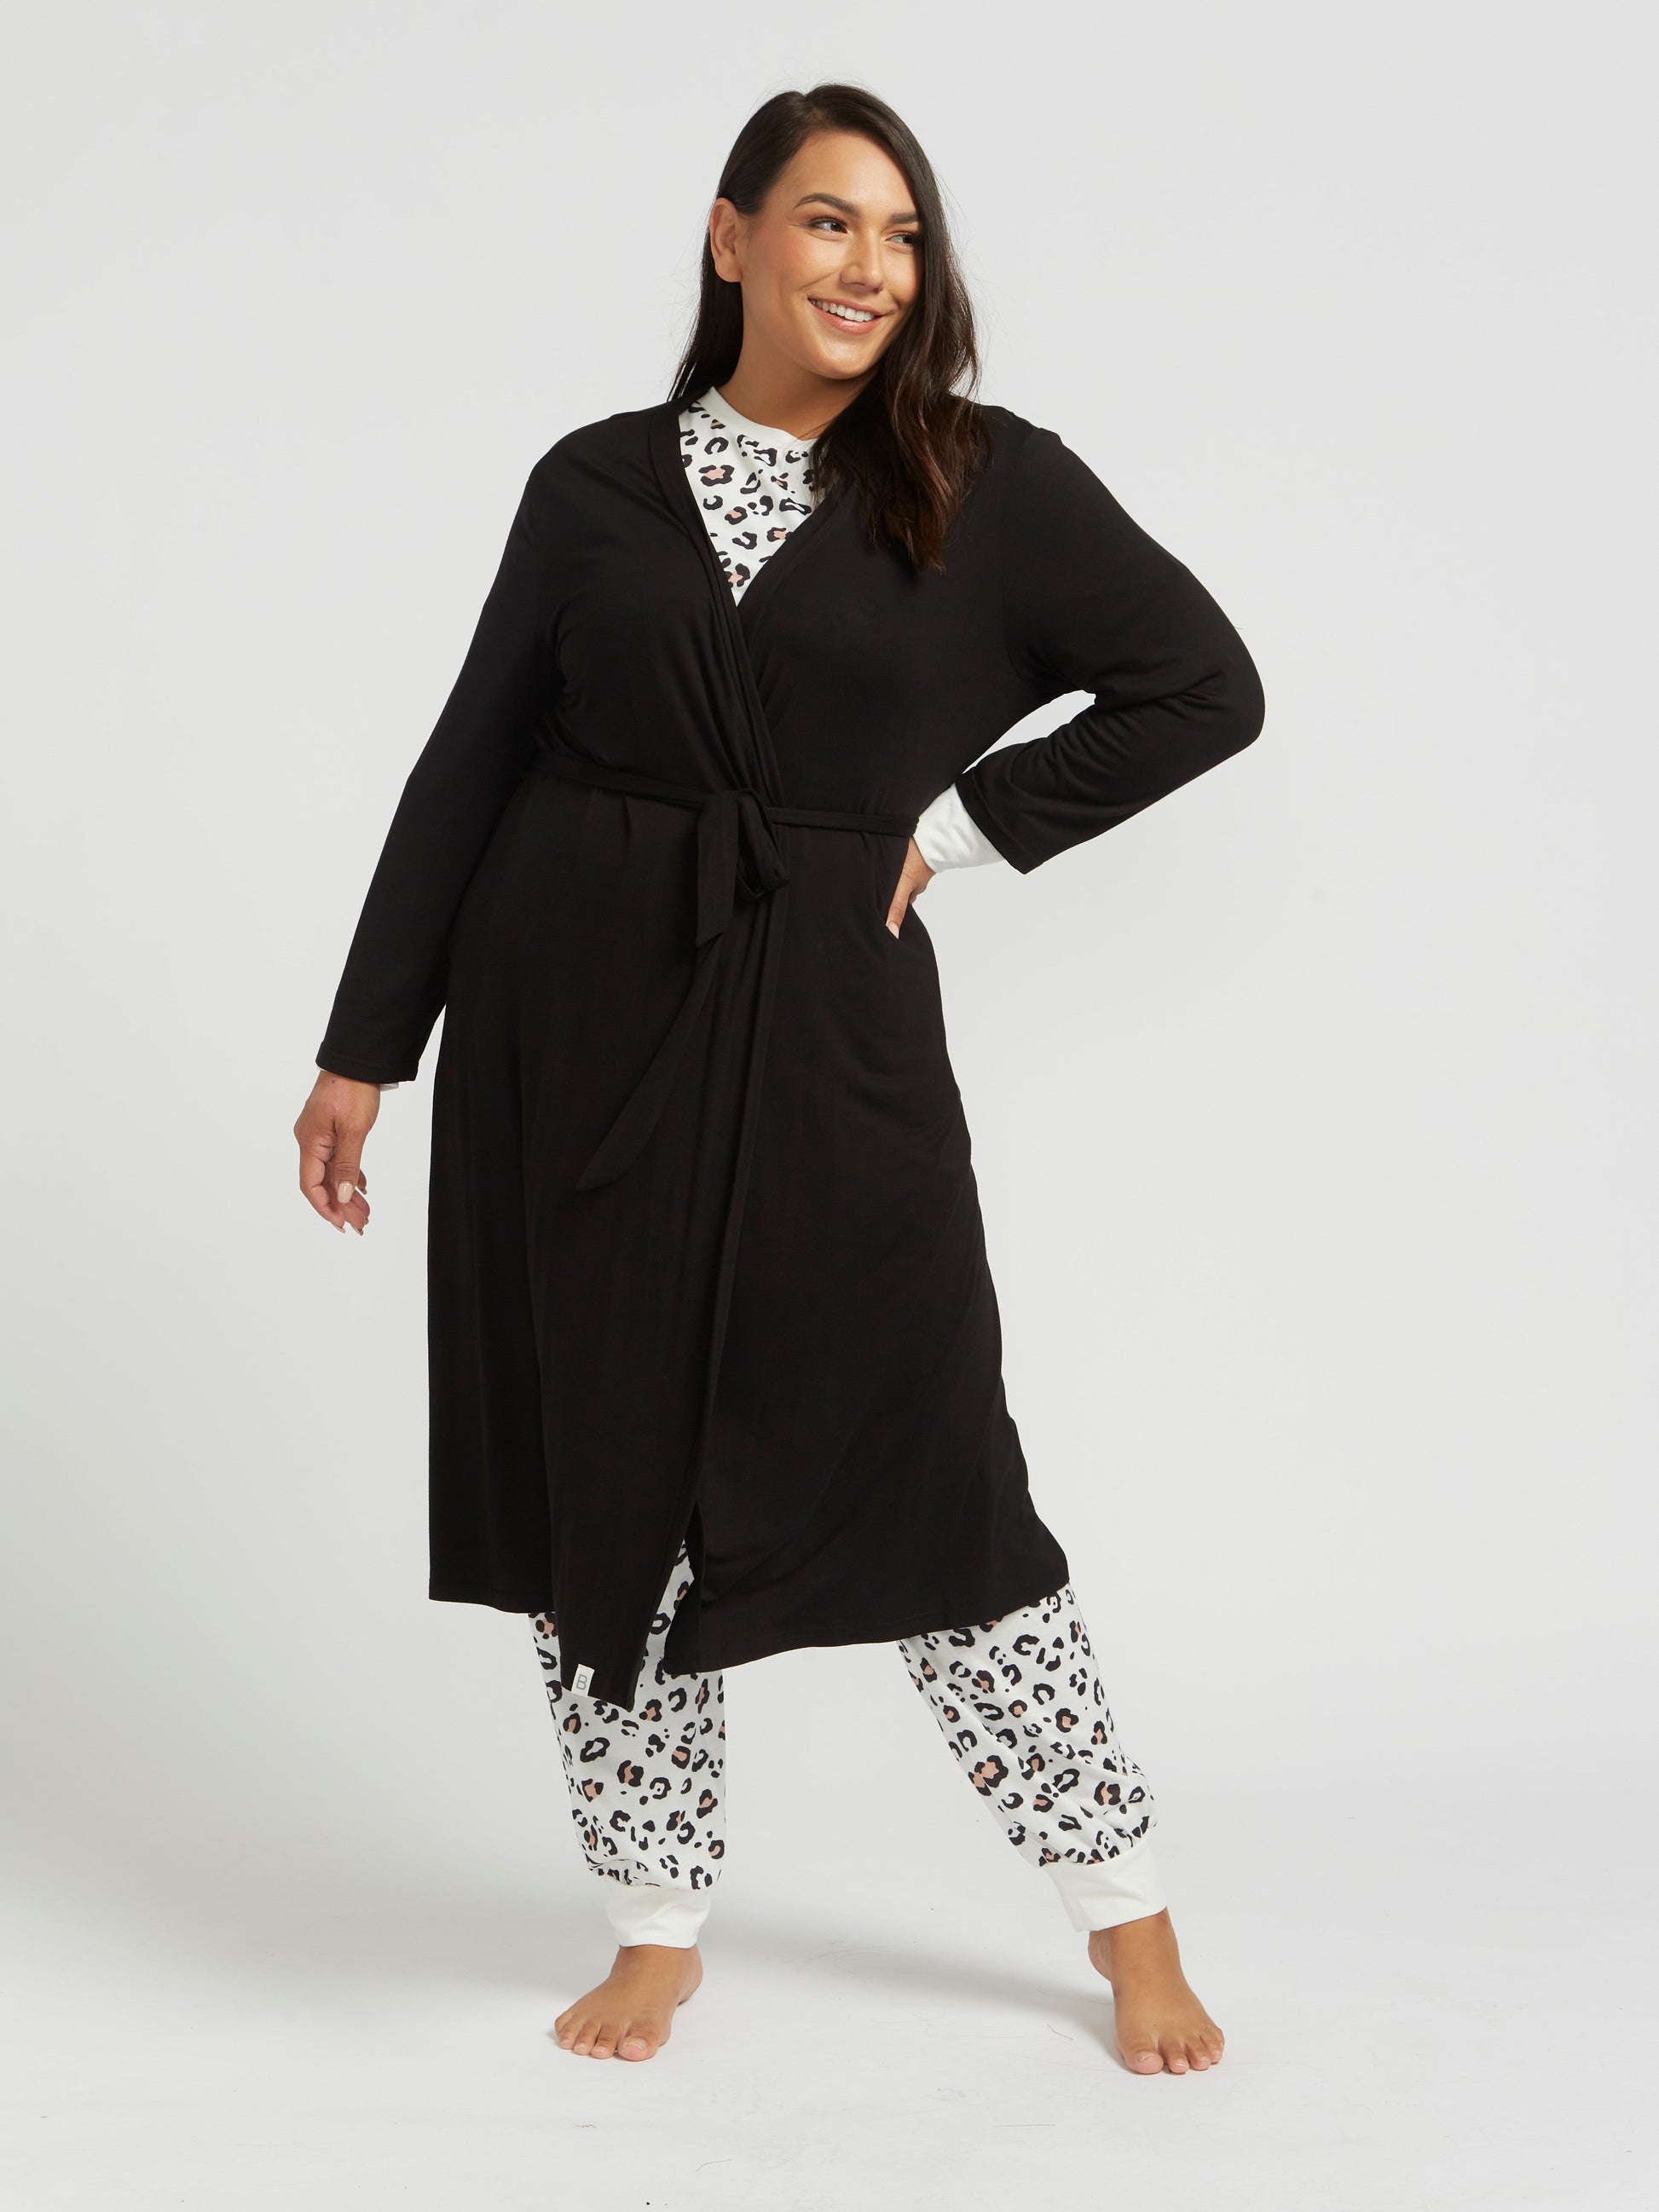 Berkanan “Pyjama Party” Women's Jersey PJ Set - Black